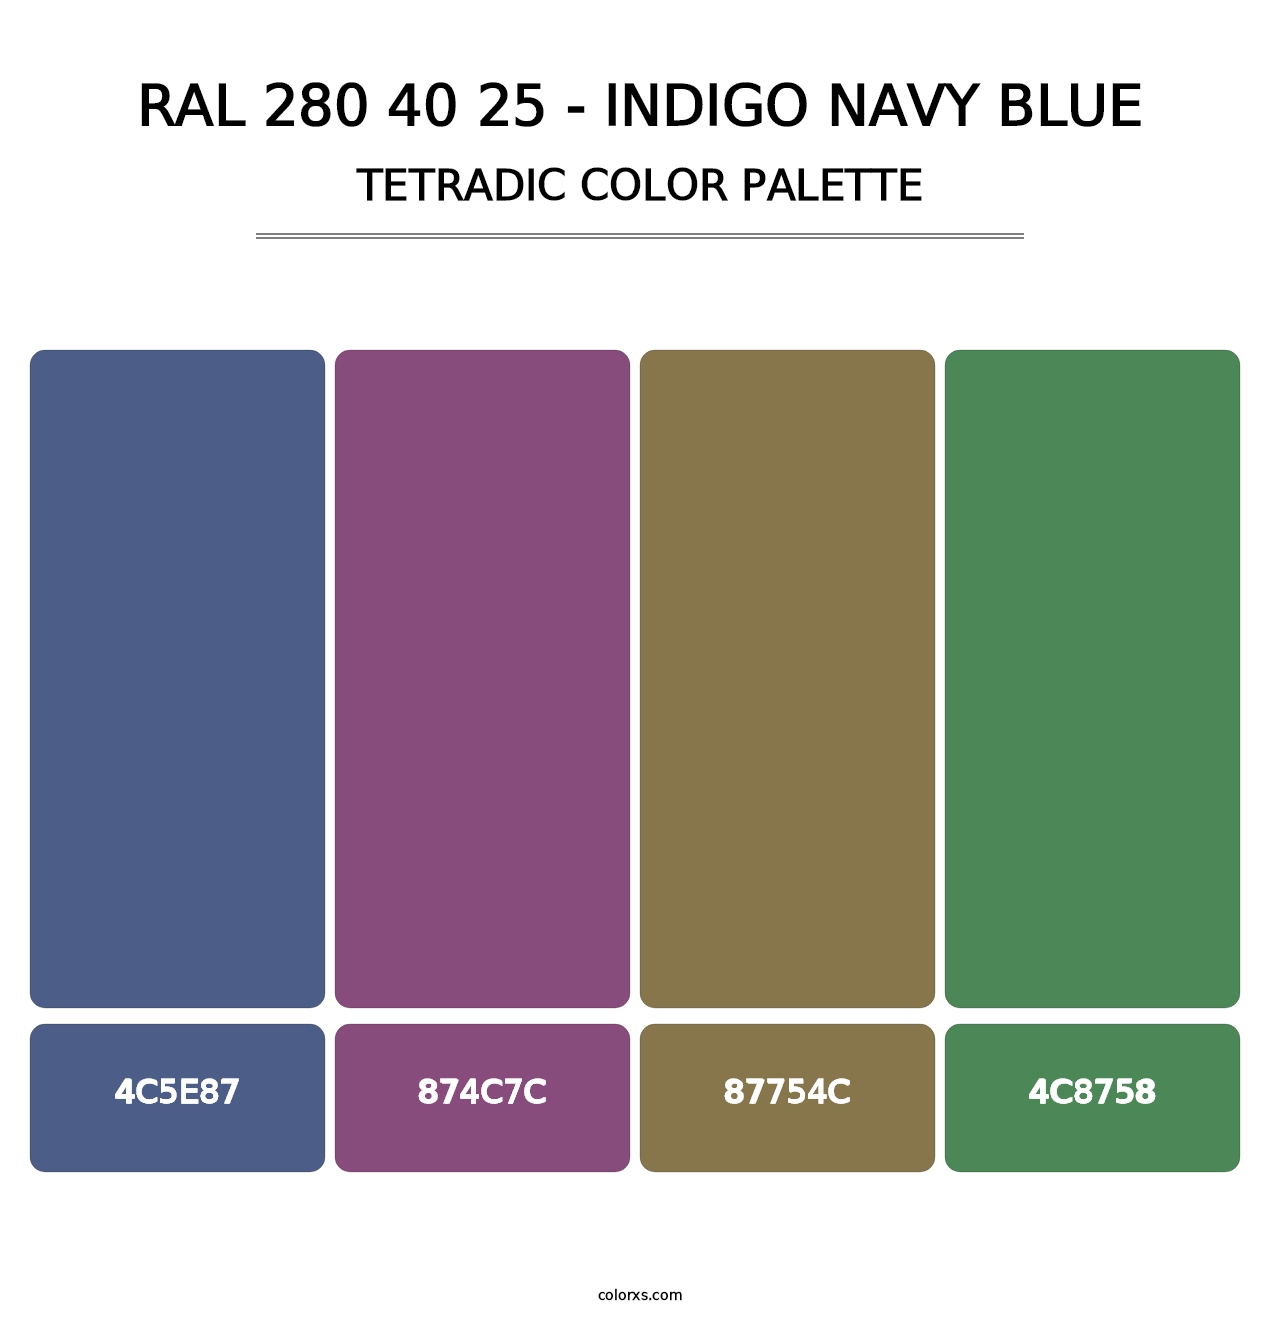 RAL 280 40 25 - Indigo Navy Blue - Tetradic Color Palette